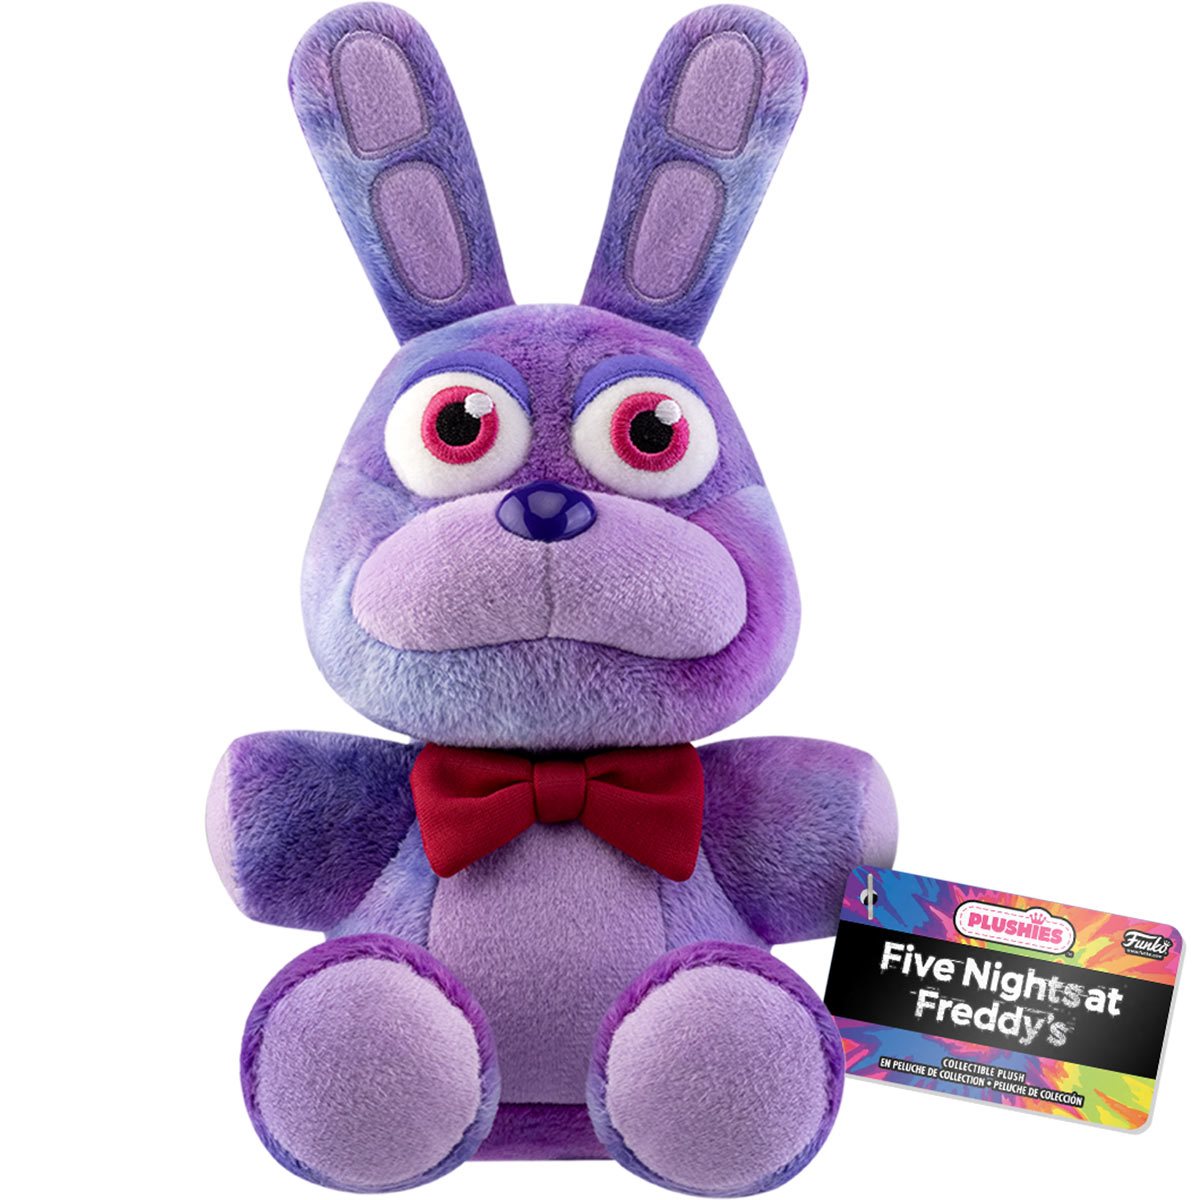 Five Nights at Freddy's - Glamrock Bonnie Plush Toy Buy on